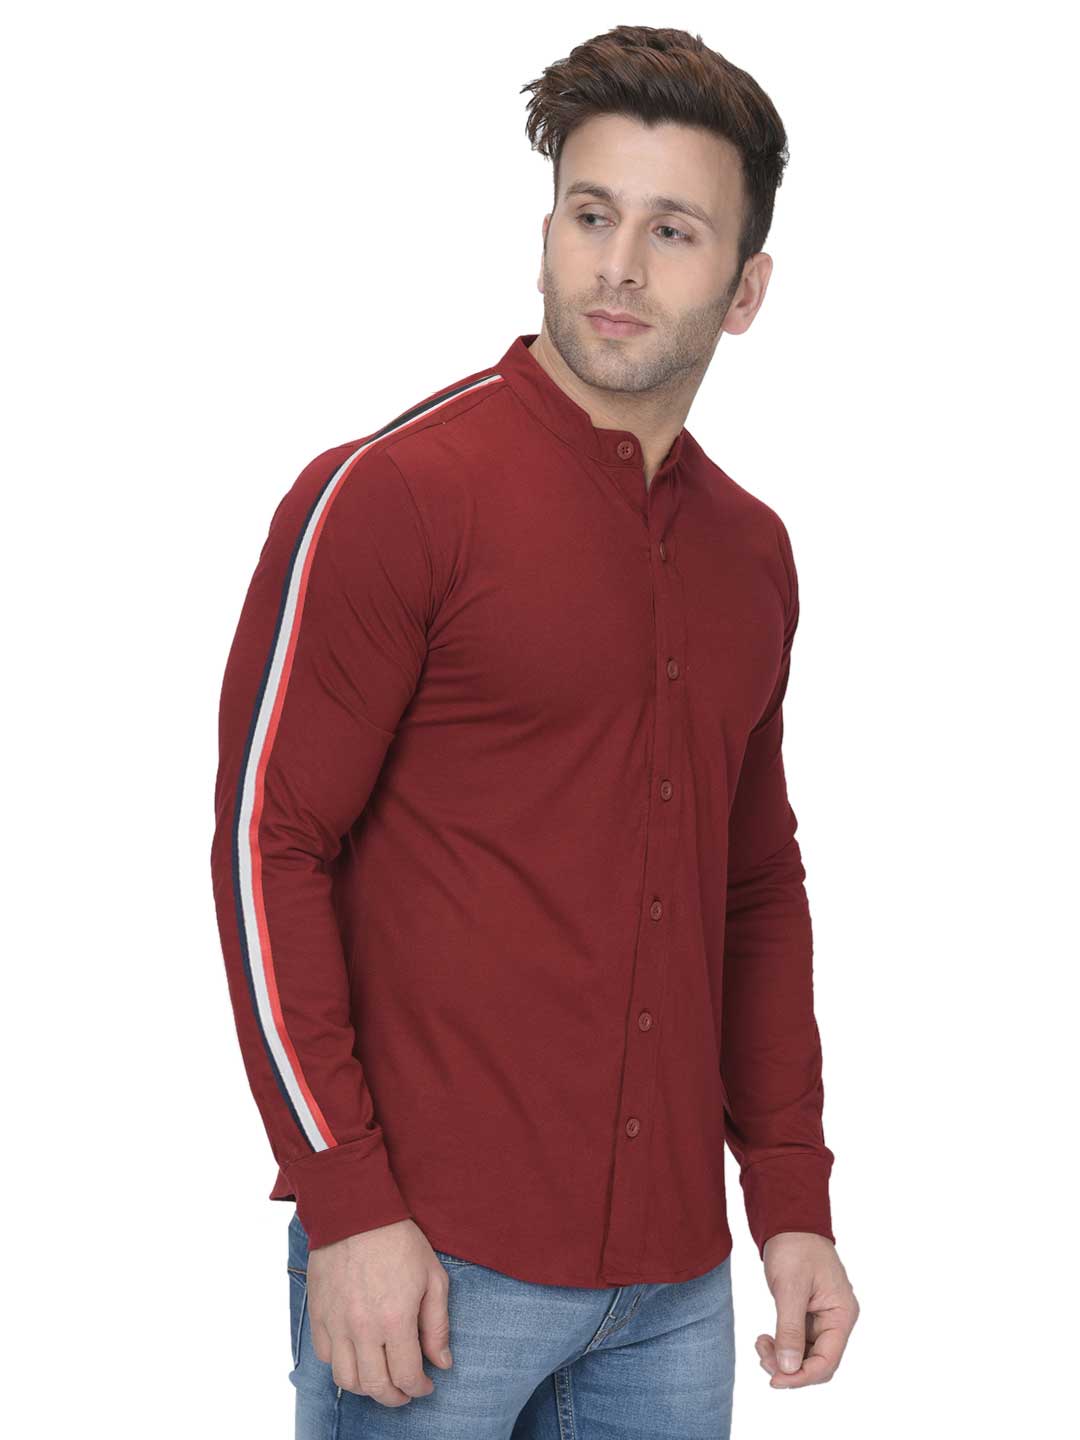 Maroon Full Sleeves Casual Taping Shirt